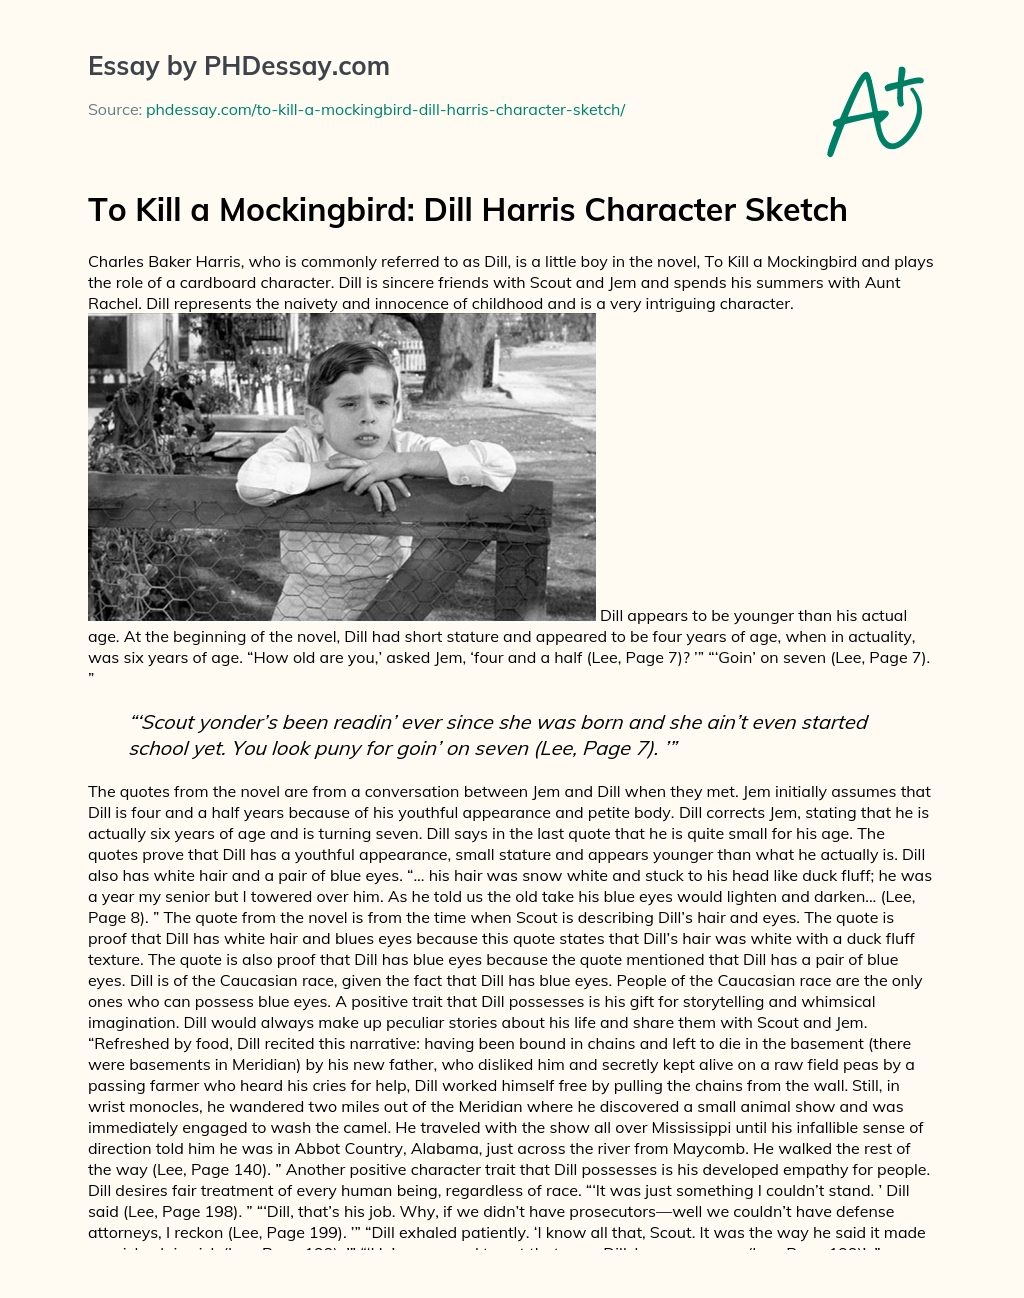 To Kill a Mockingbird: Dill Harris Character Sketch essay